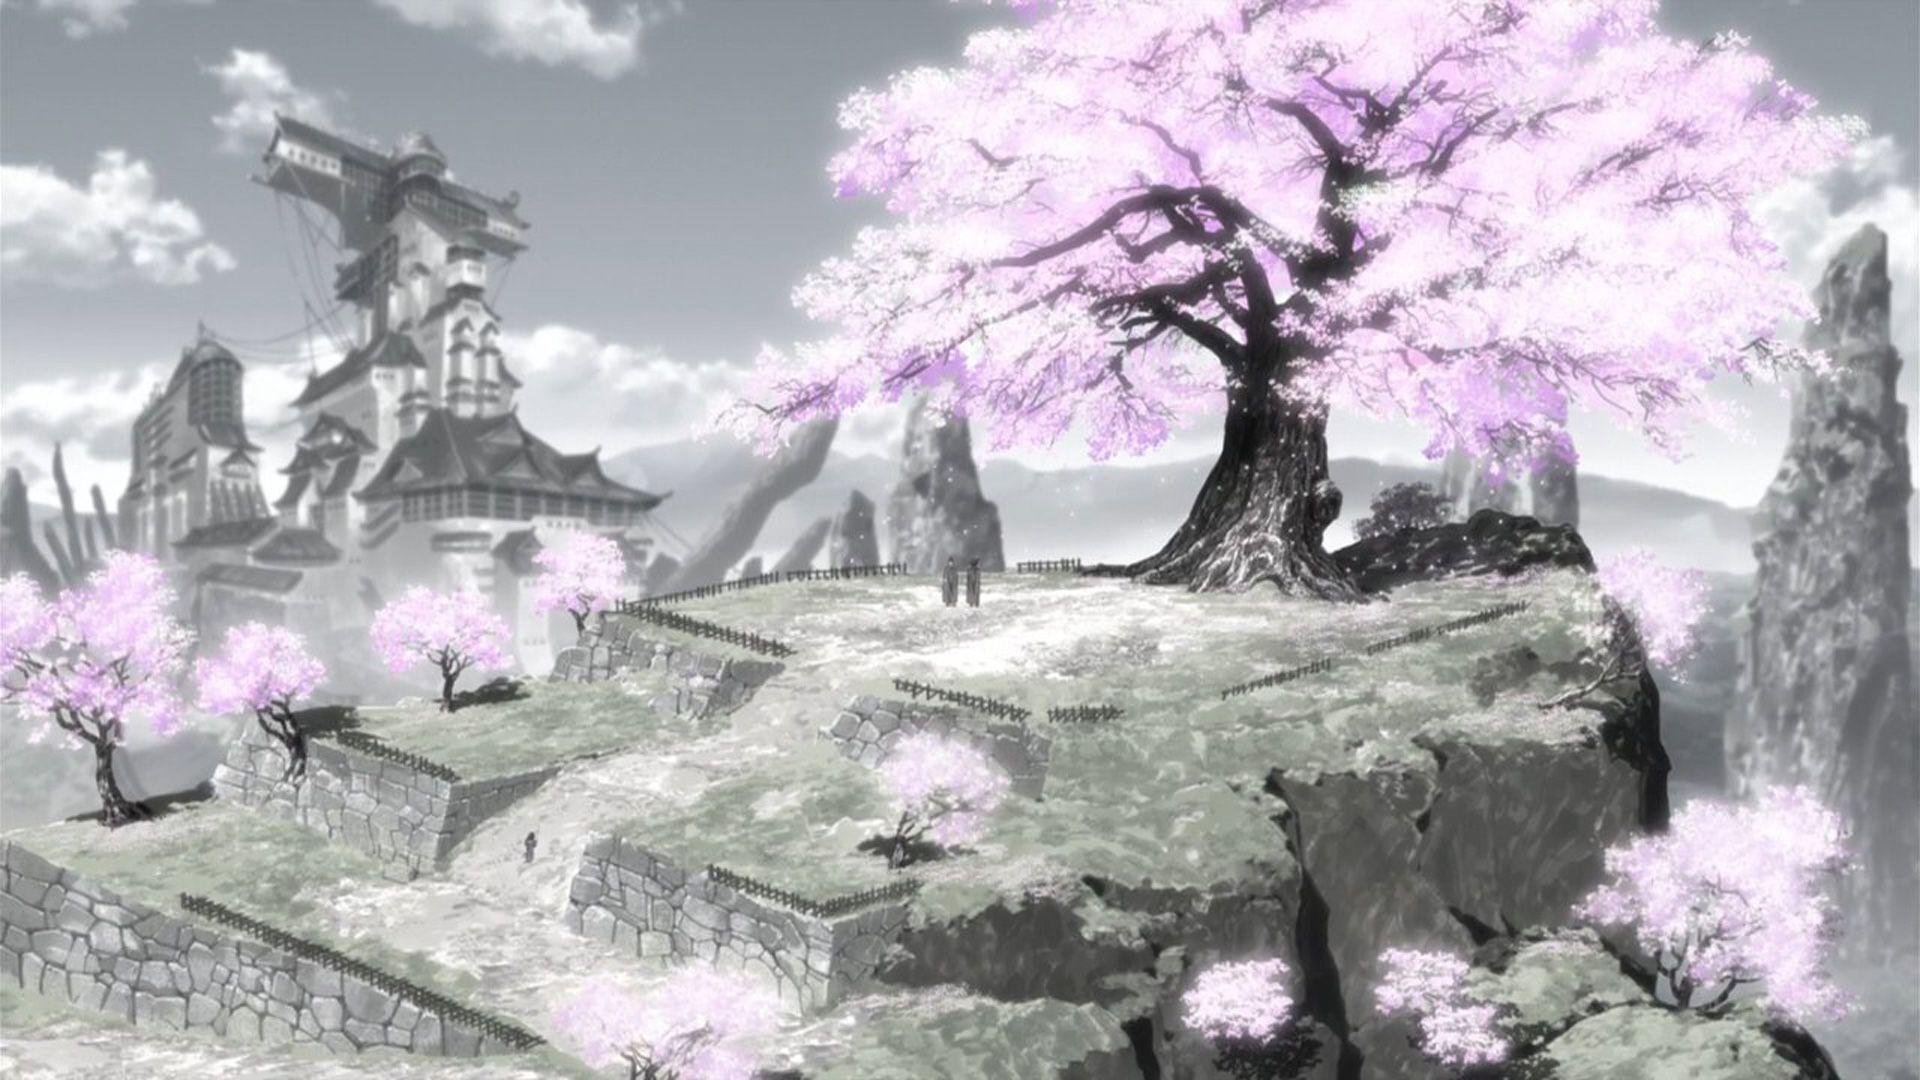 Afro Samurai Anime Background Image. HD Wallpaper Image